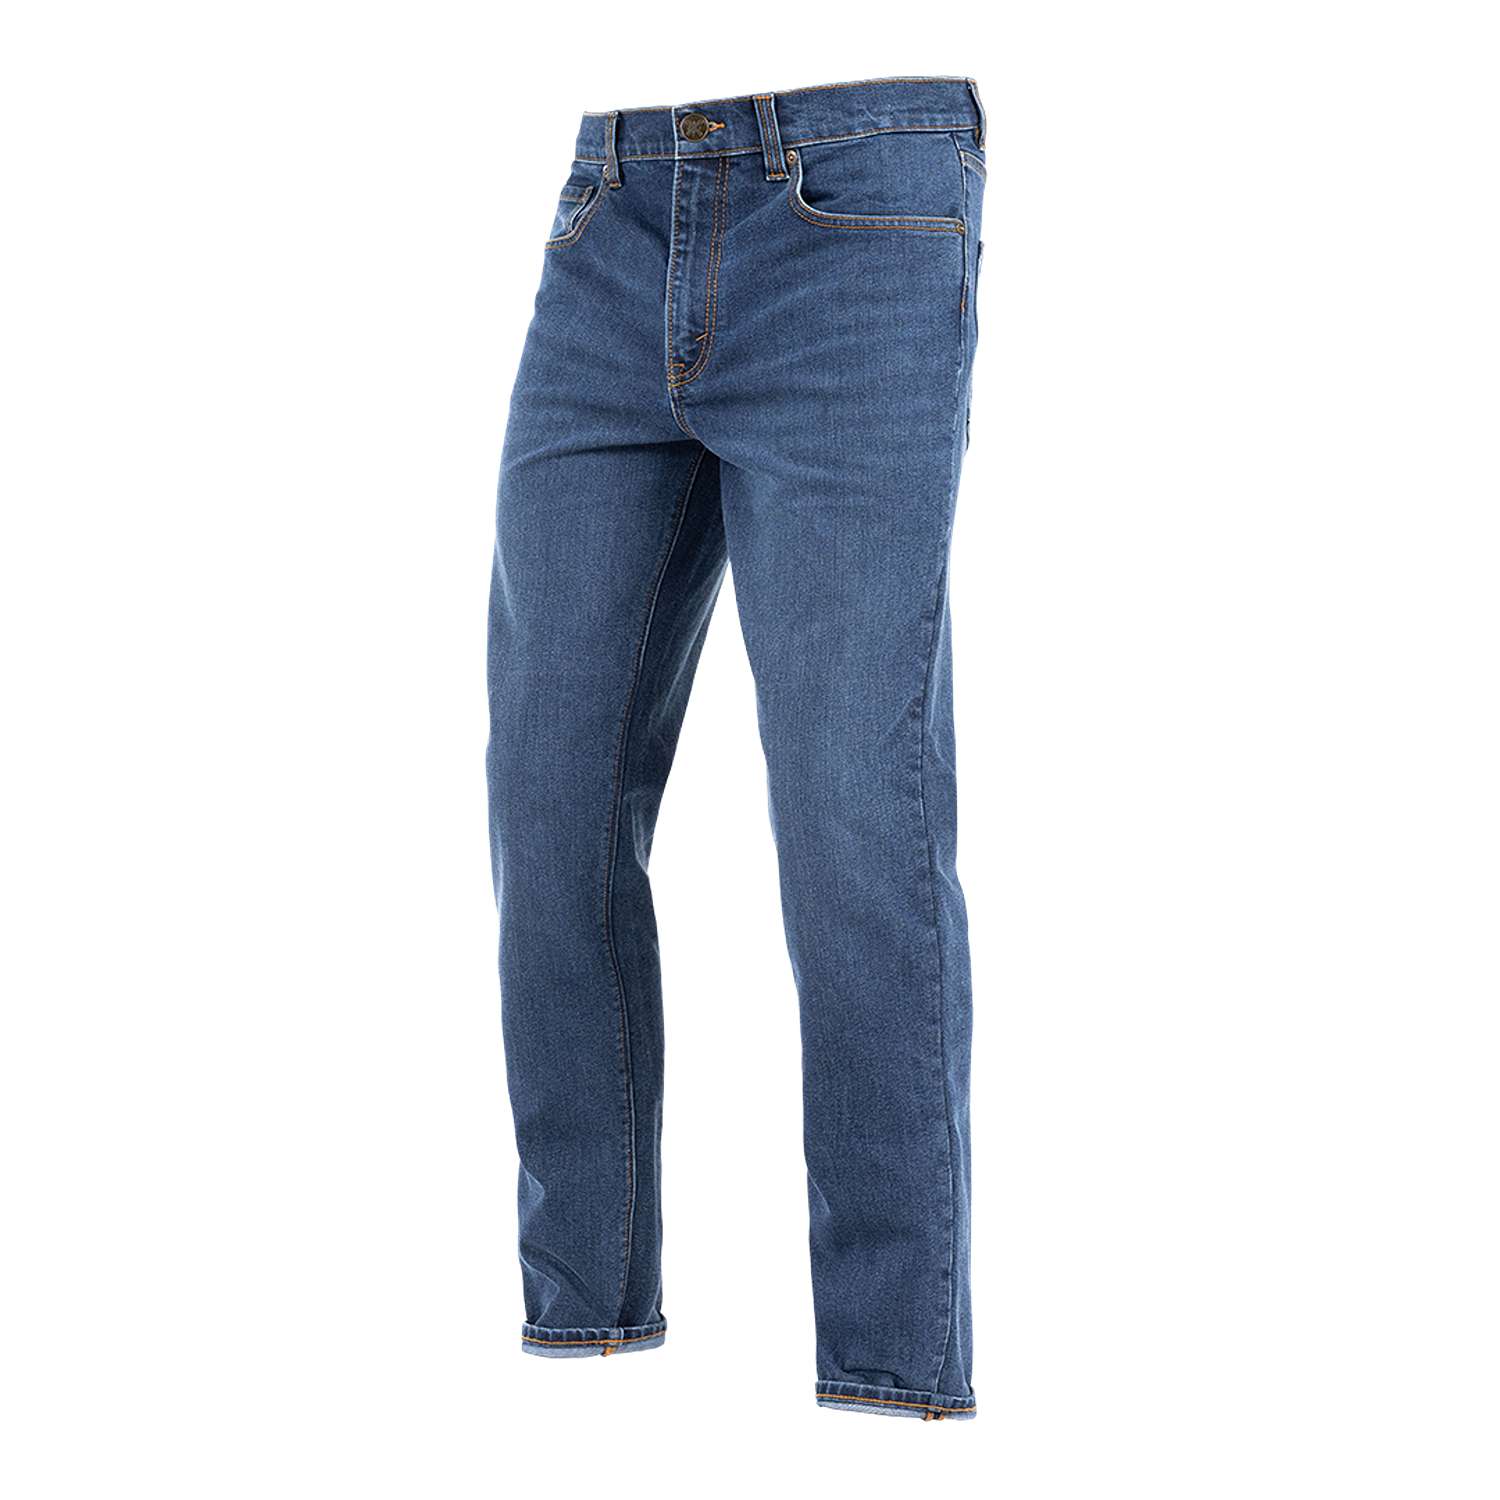 Image of EU John Doe Classic Tapered Jeans Indigo Taille W32/L34